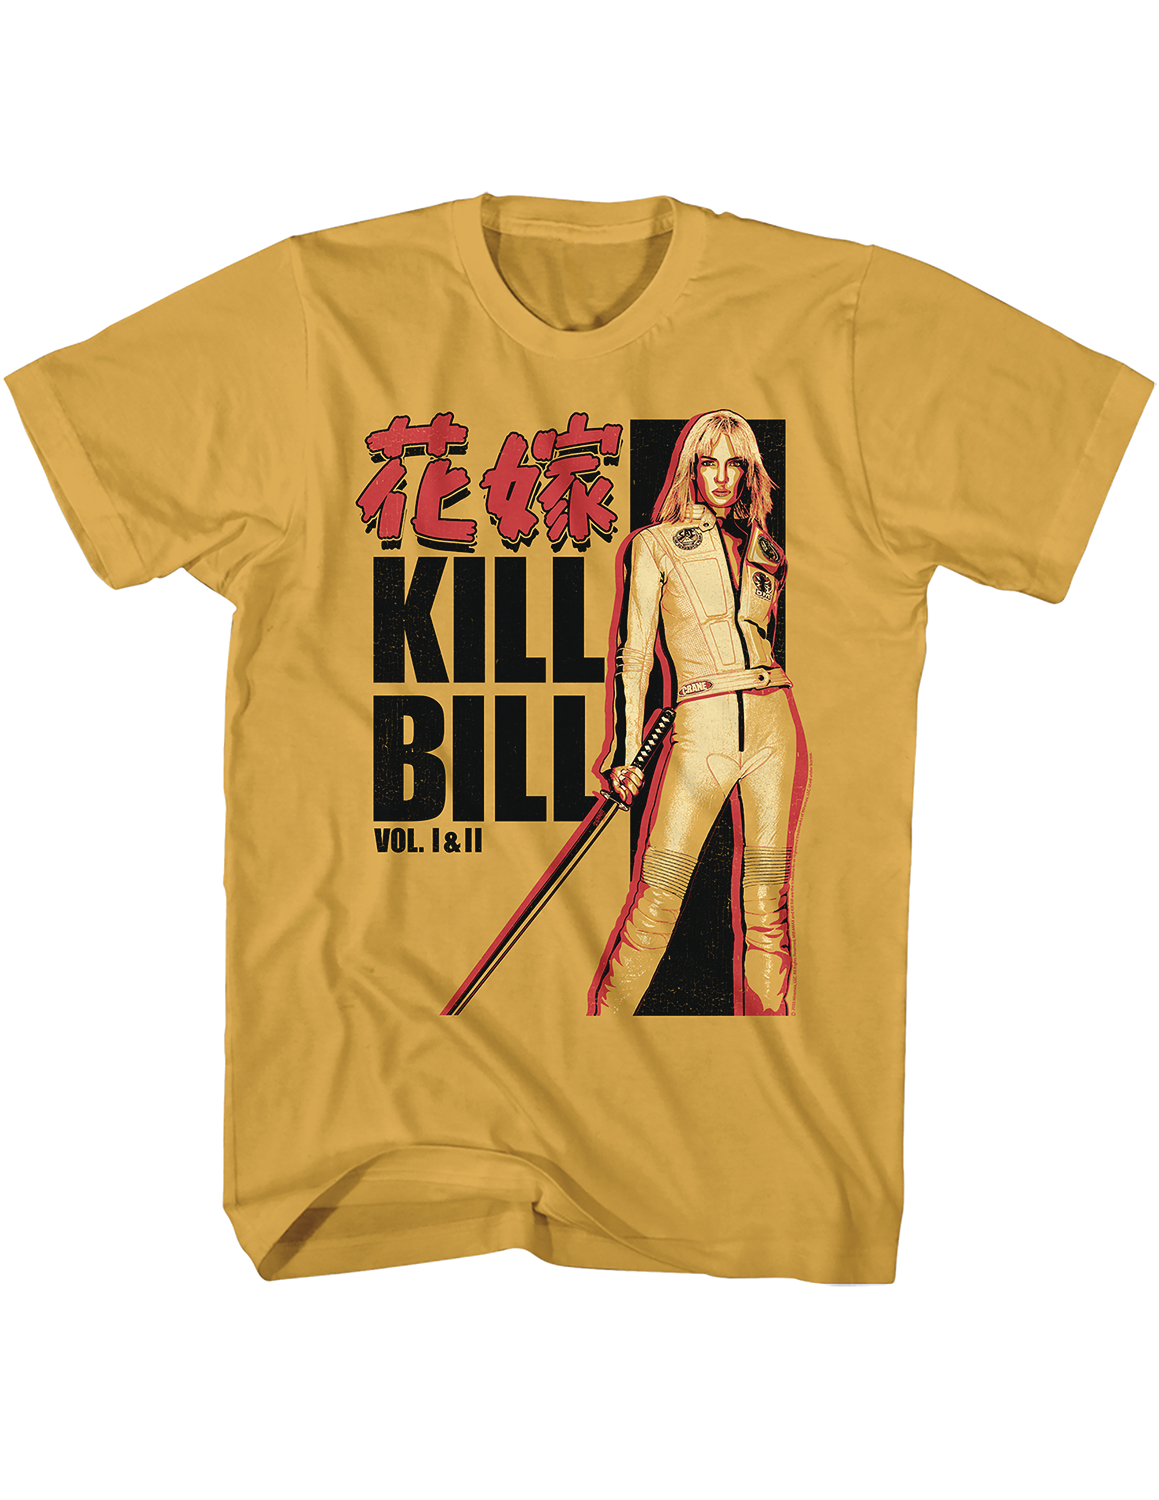 Kill Bill The Bride Yellow T-Shirt Large